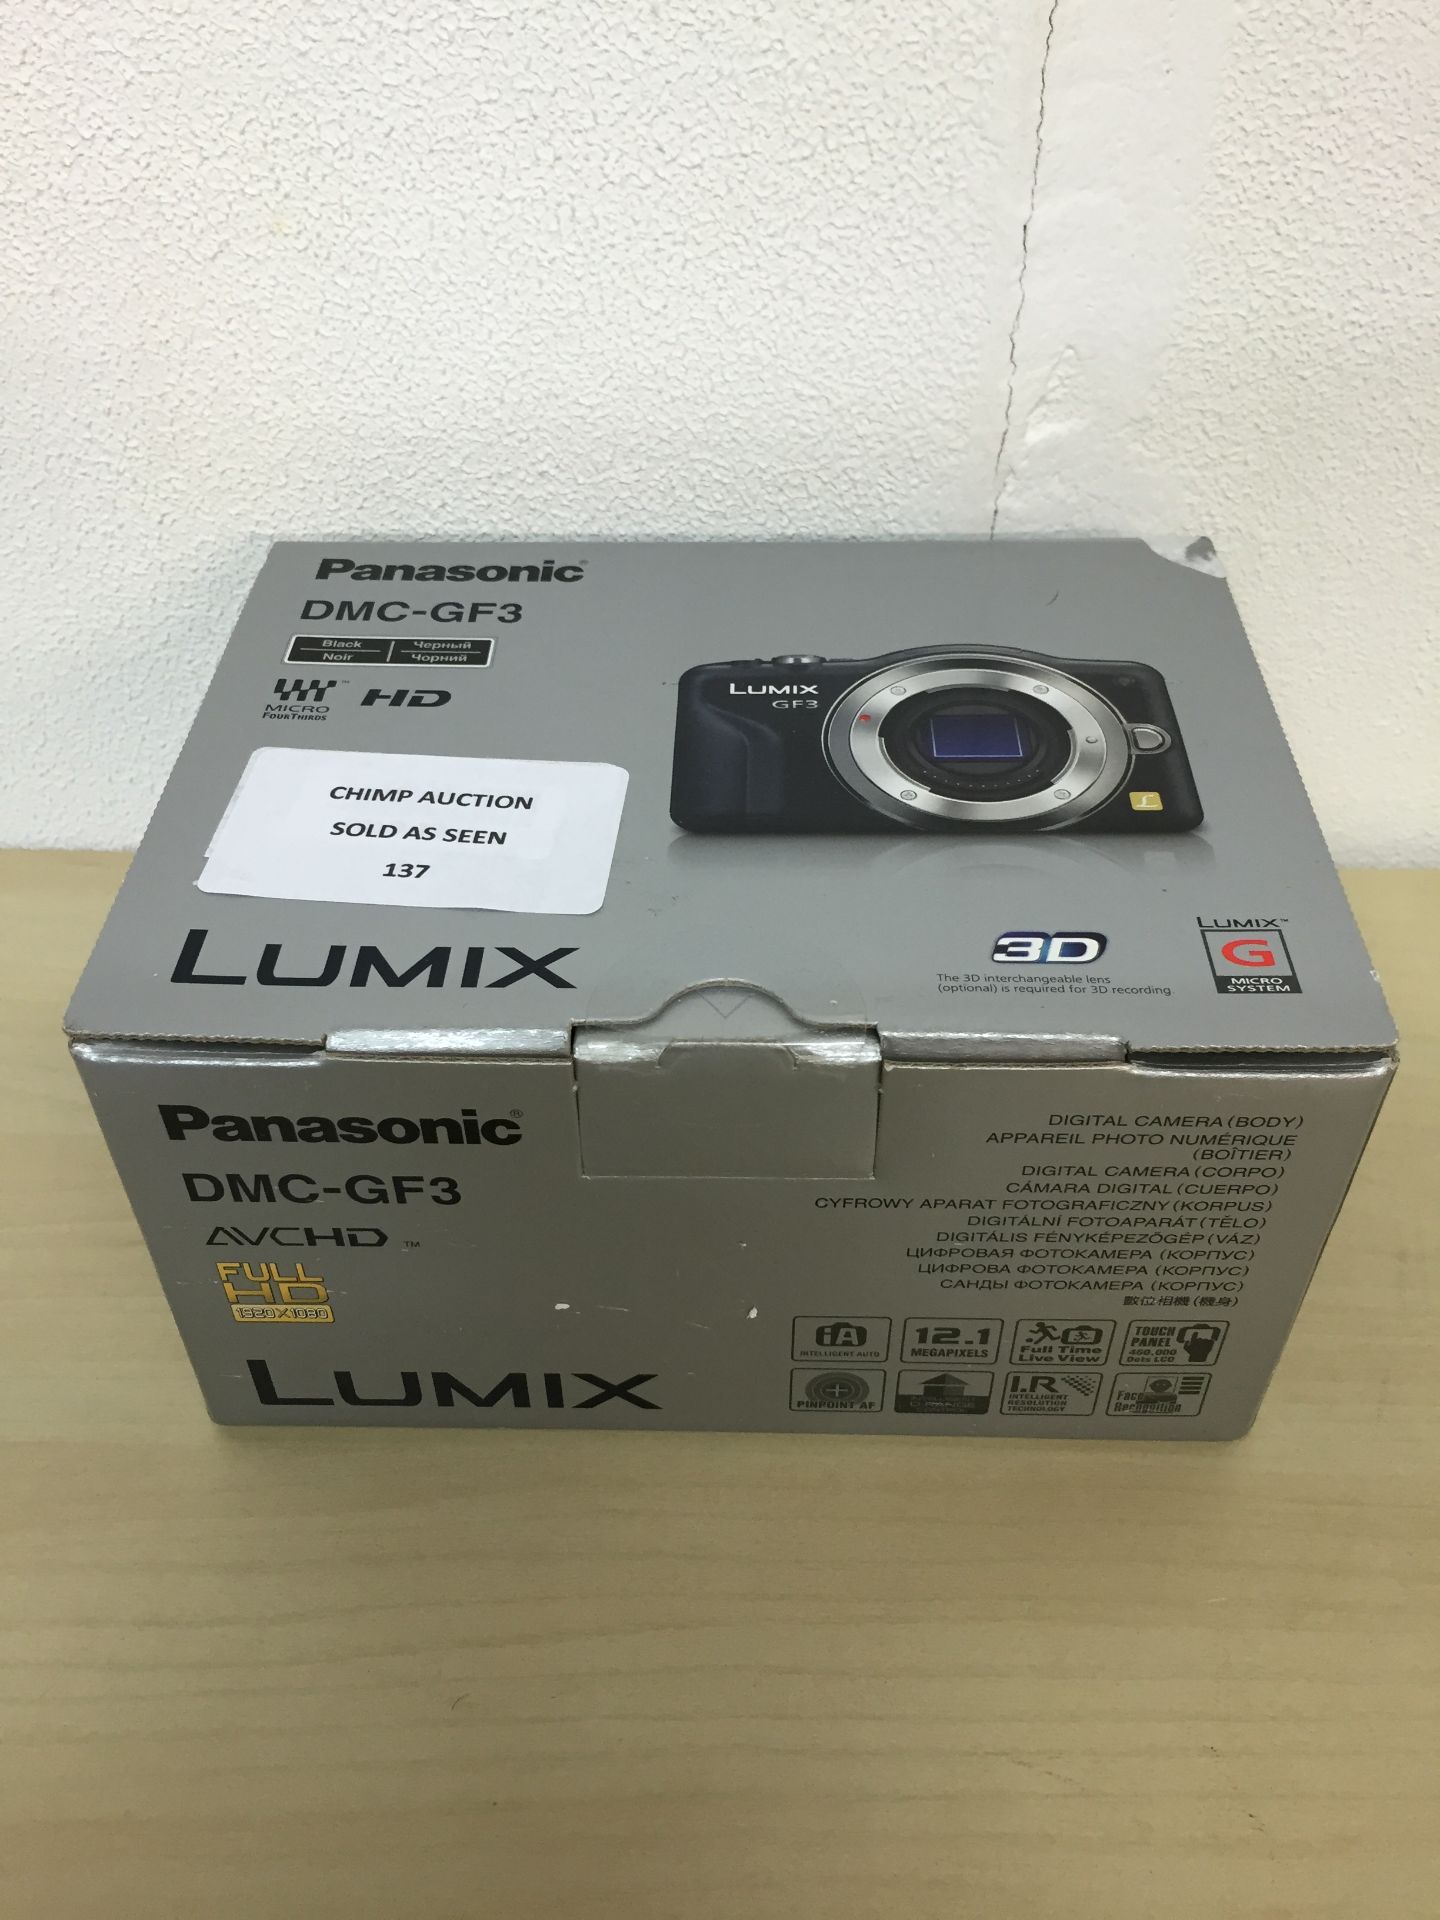 BOXED BRAND NEW PANASONIC LUMIX DMC-GF3 HD CAMERA RRP £299.99